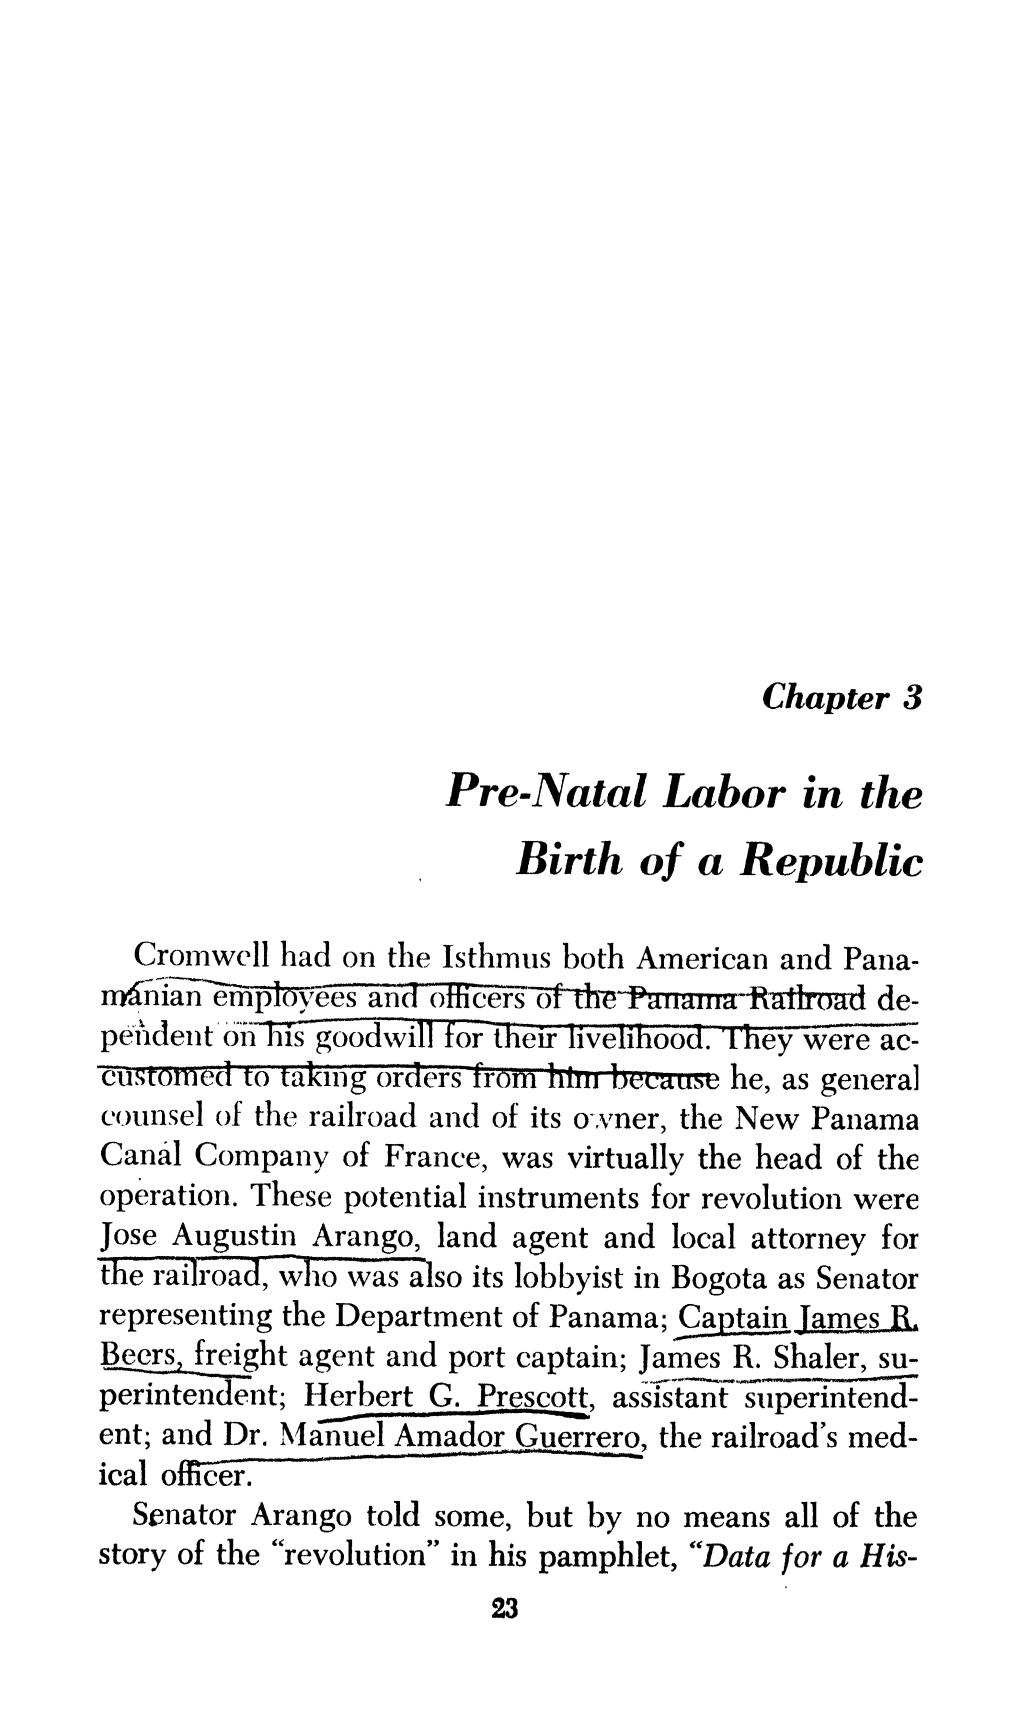 Birth of a Republic